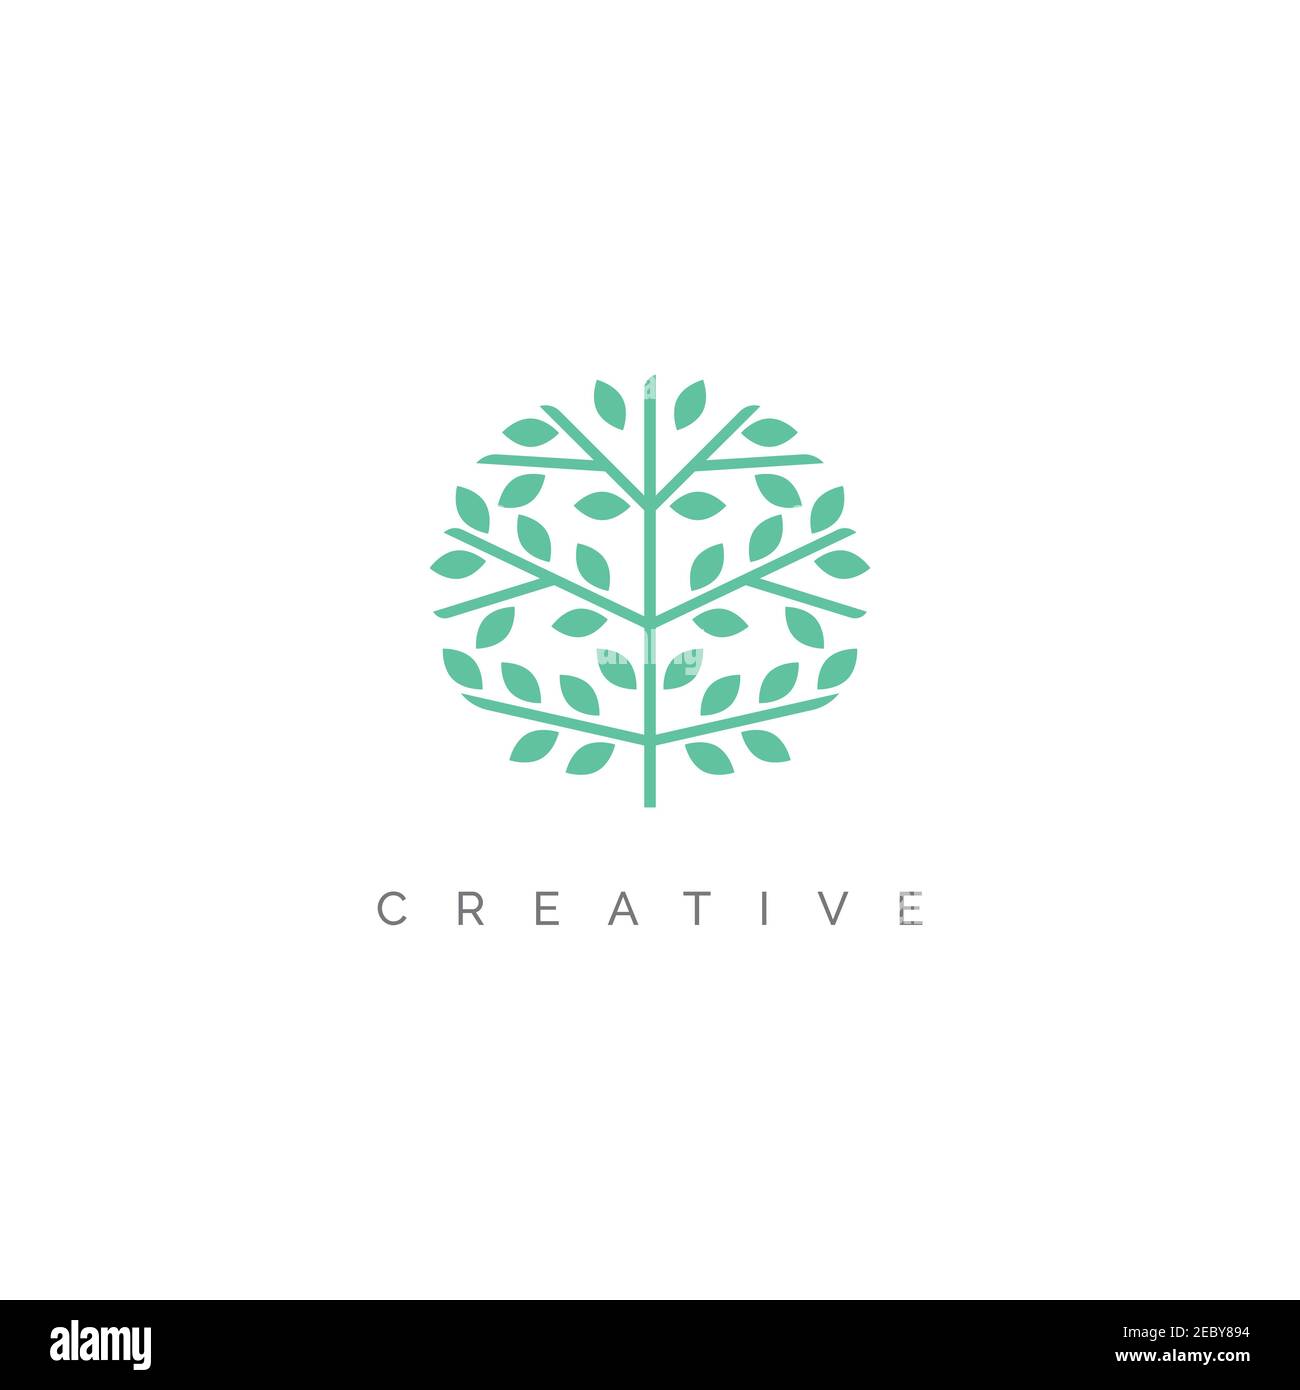 Kreative abstrakte Baum Logo Design Illustration Symbol Vektor Vorlage Stock Vektor